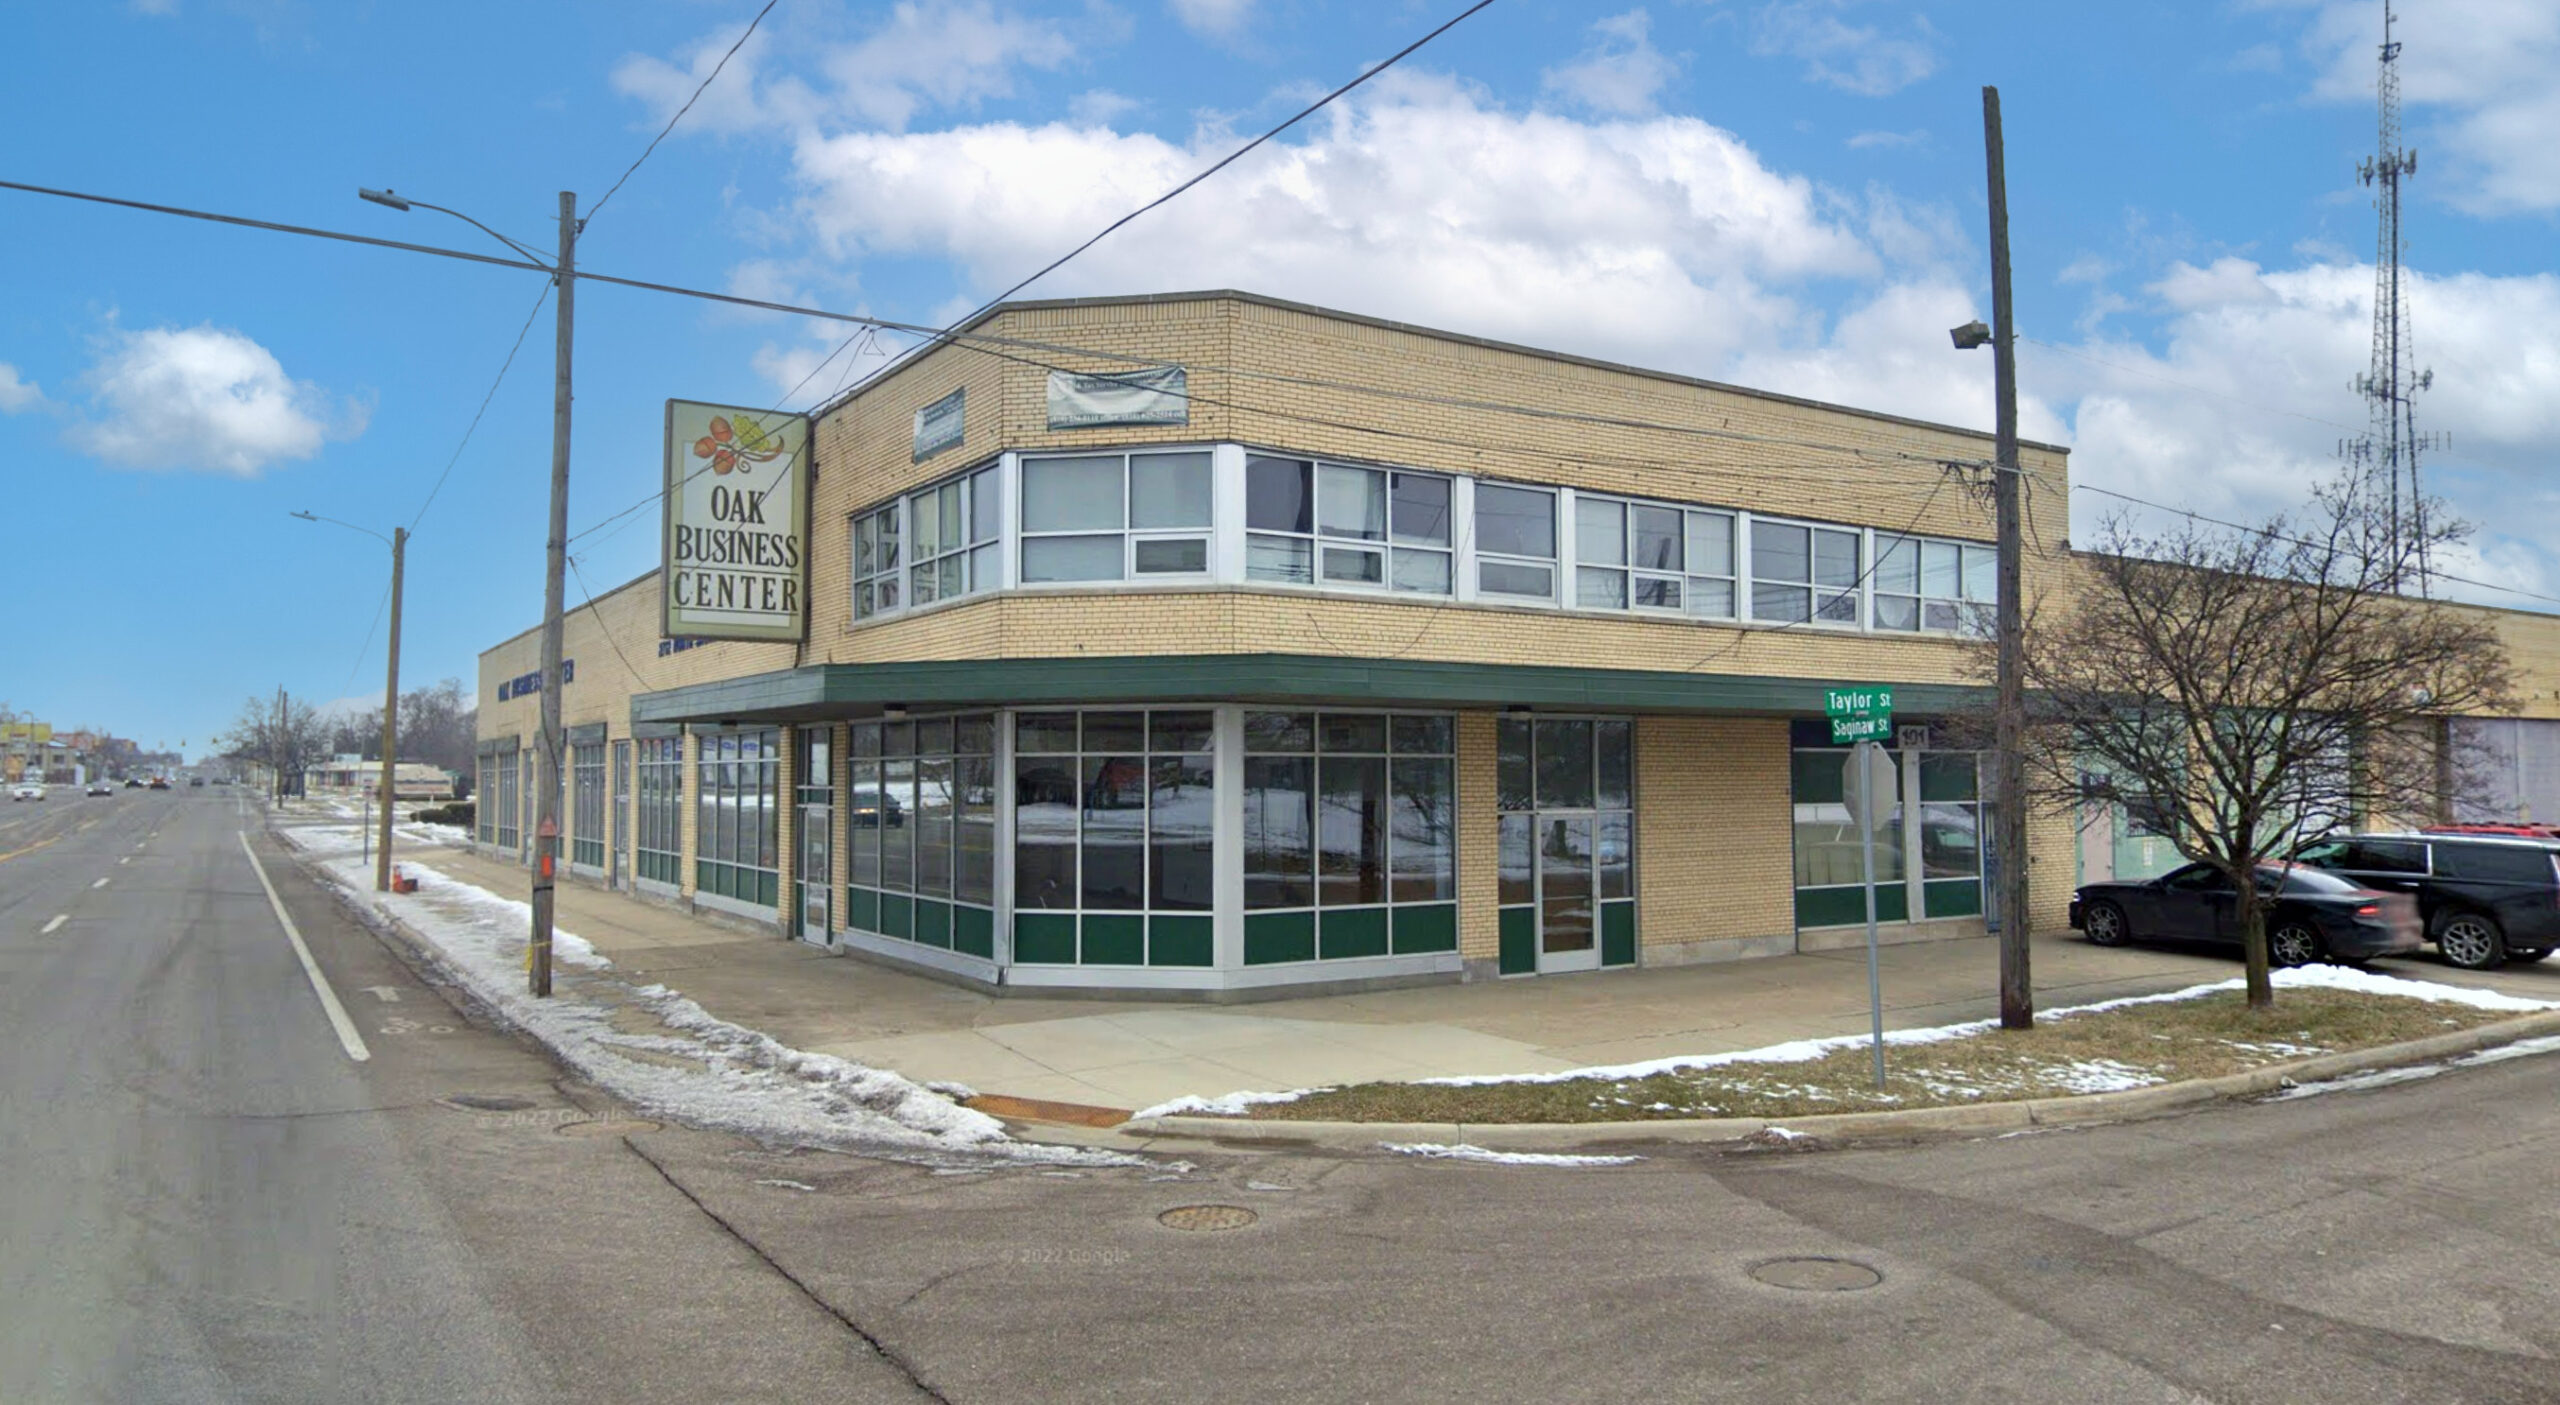 Oak Business Center in Flint, Michigan